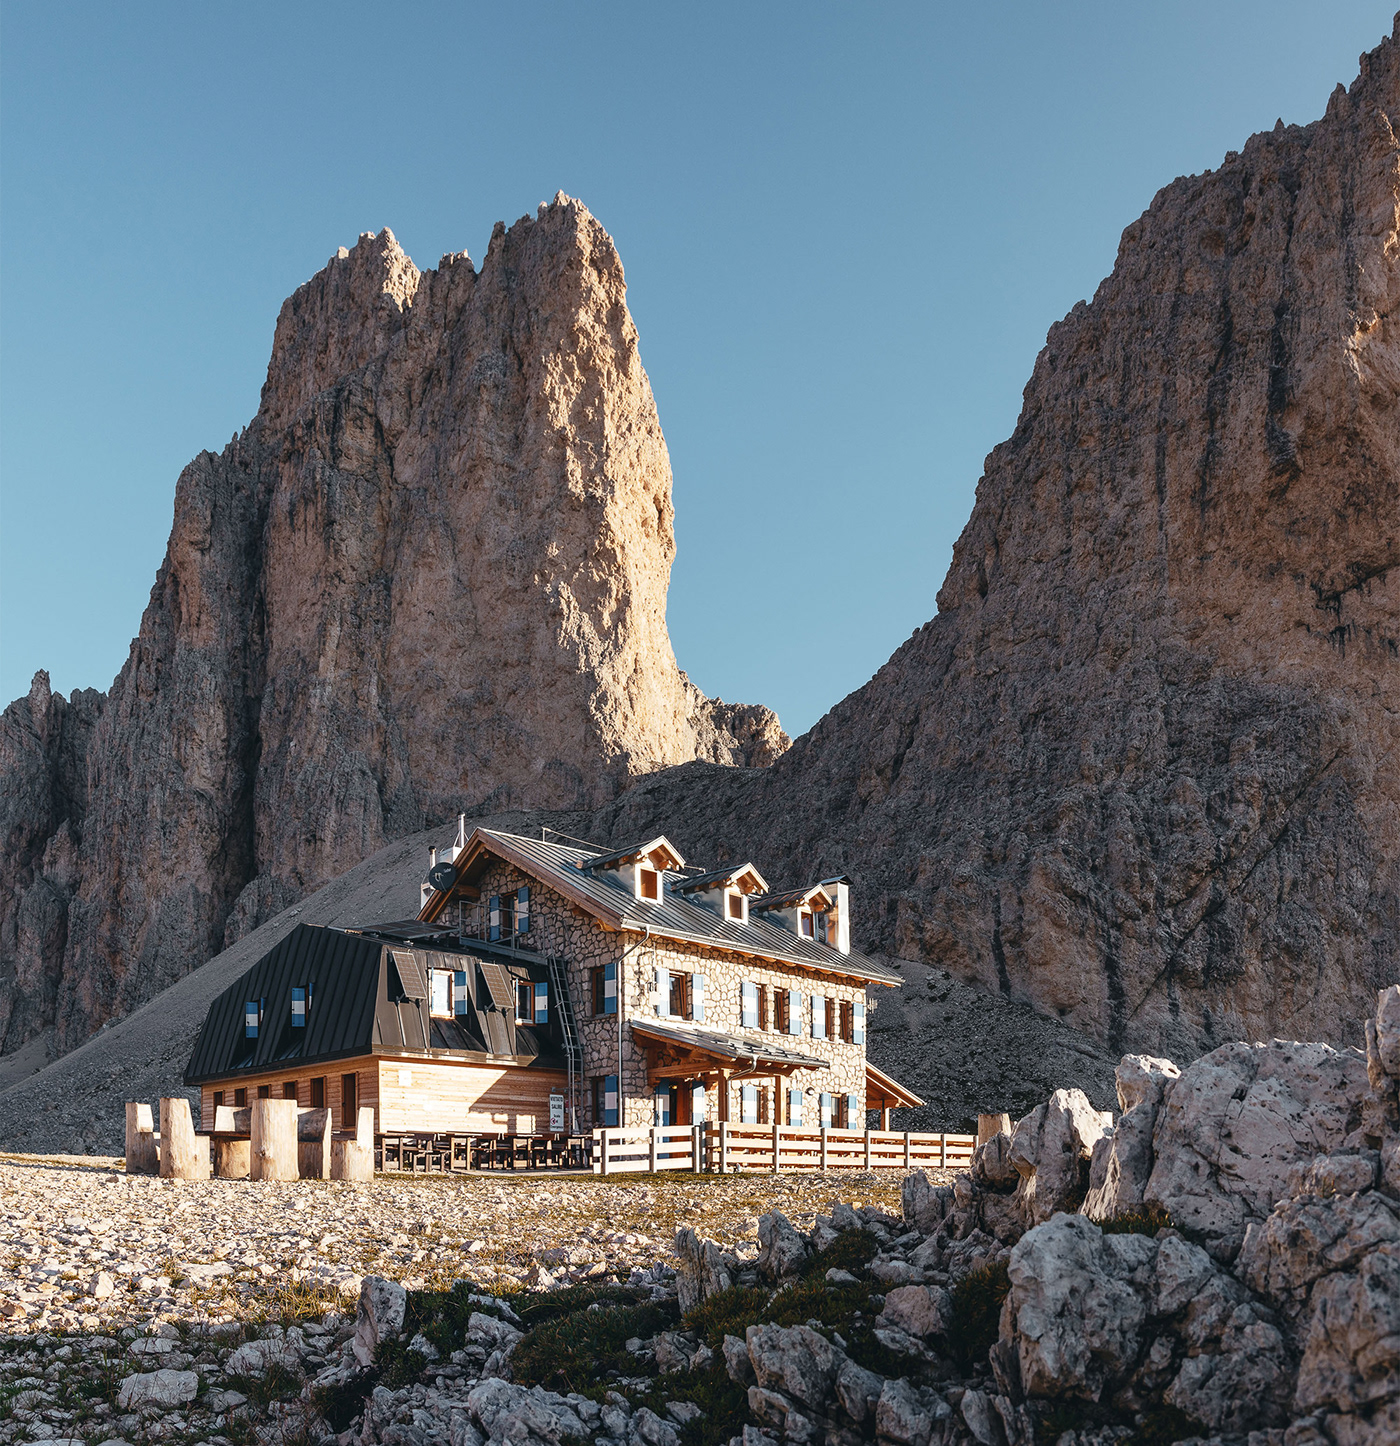 dolomites hiking huts alps tour Italy